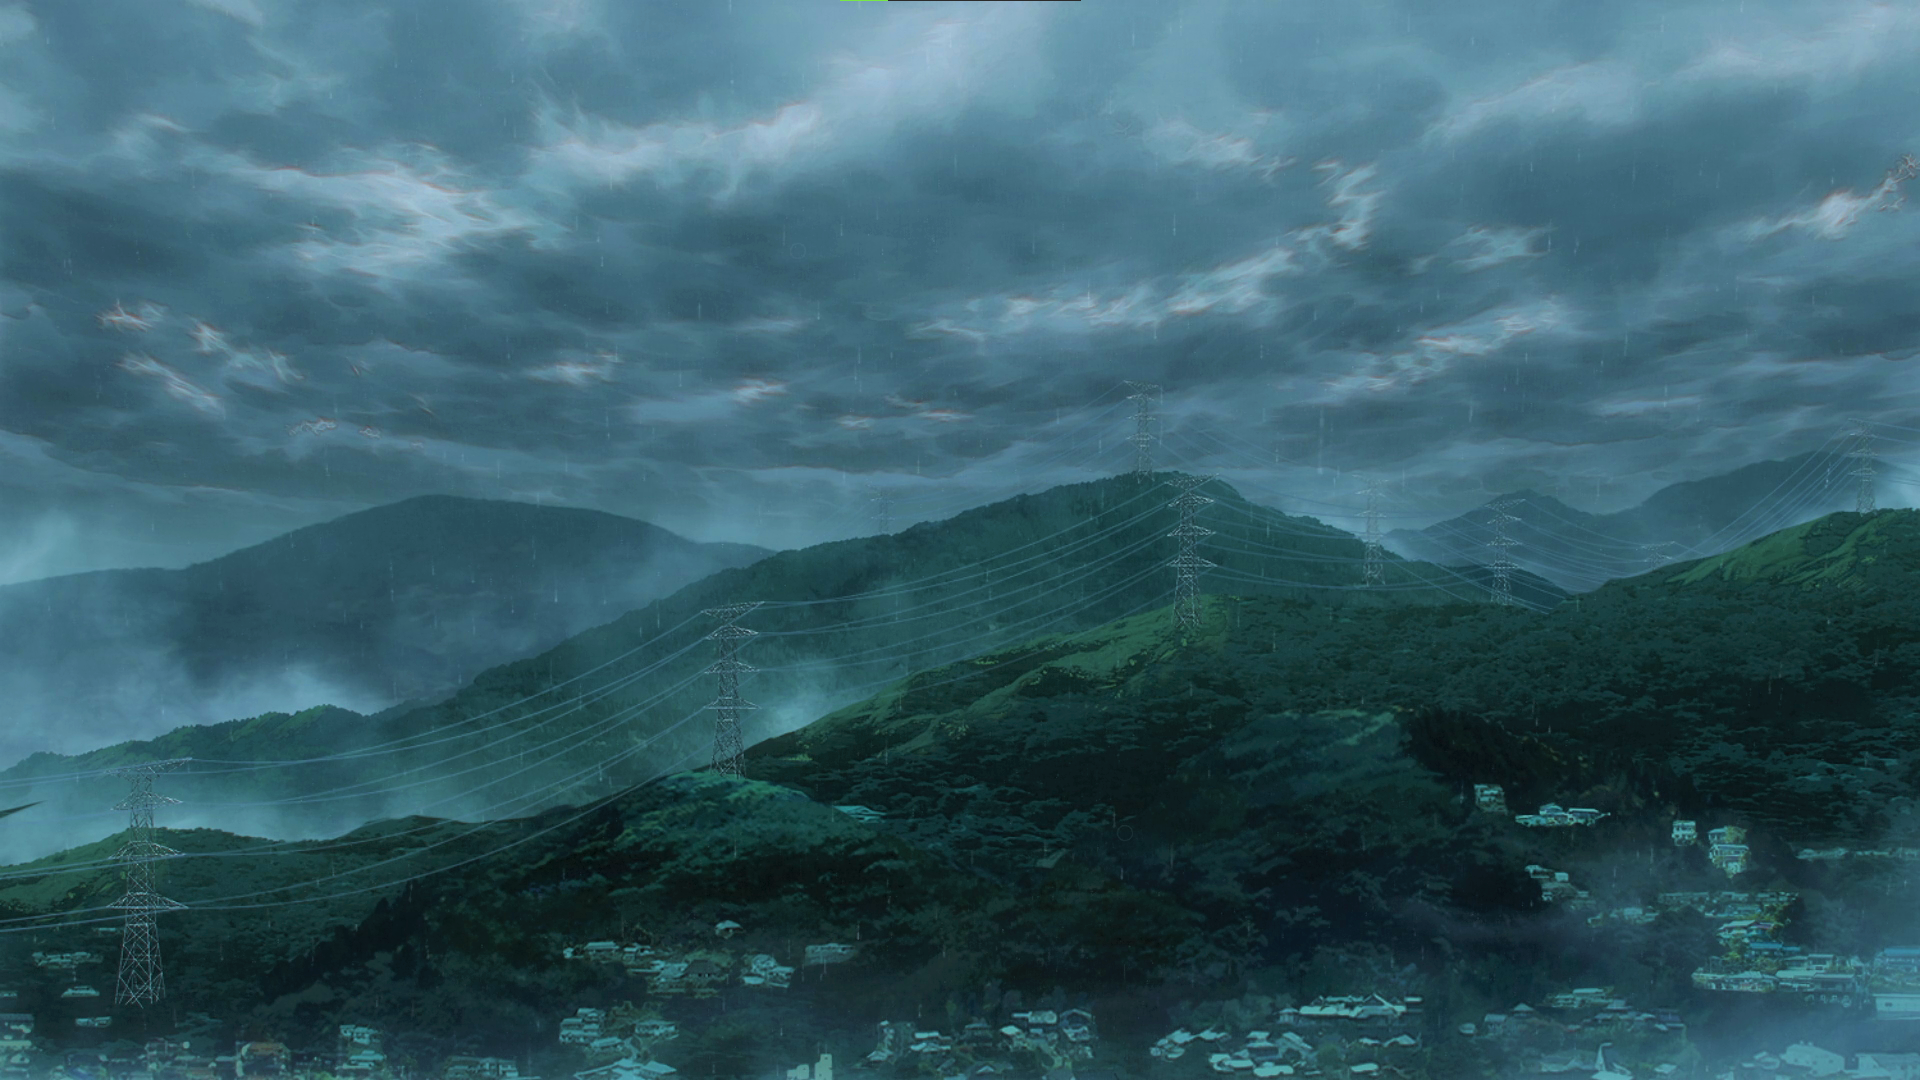 Anime 1920x1080 Jujutsu Kaisen mountains rain overcast clouds trees house anime Anime screenshot sky